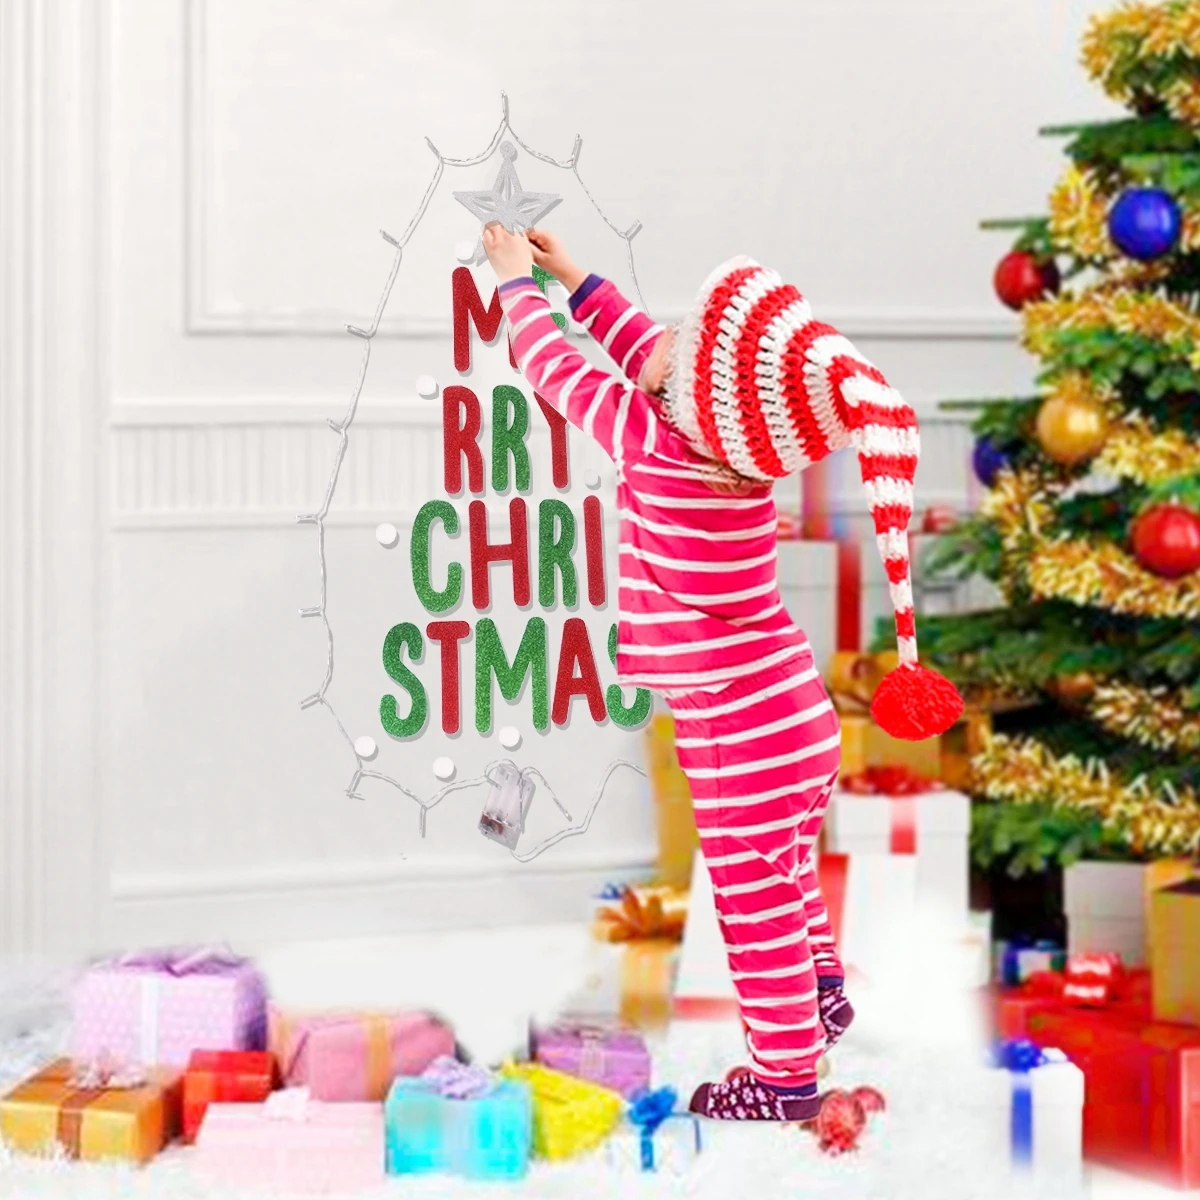 Войлочная Рождественская елка, Рождественский Декор для дома, Navidad, новогодние подарки, рождественские украшения, Санта Клаус, новогодний декор Noel